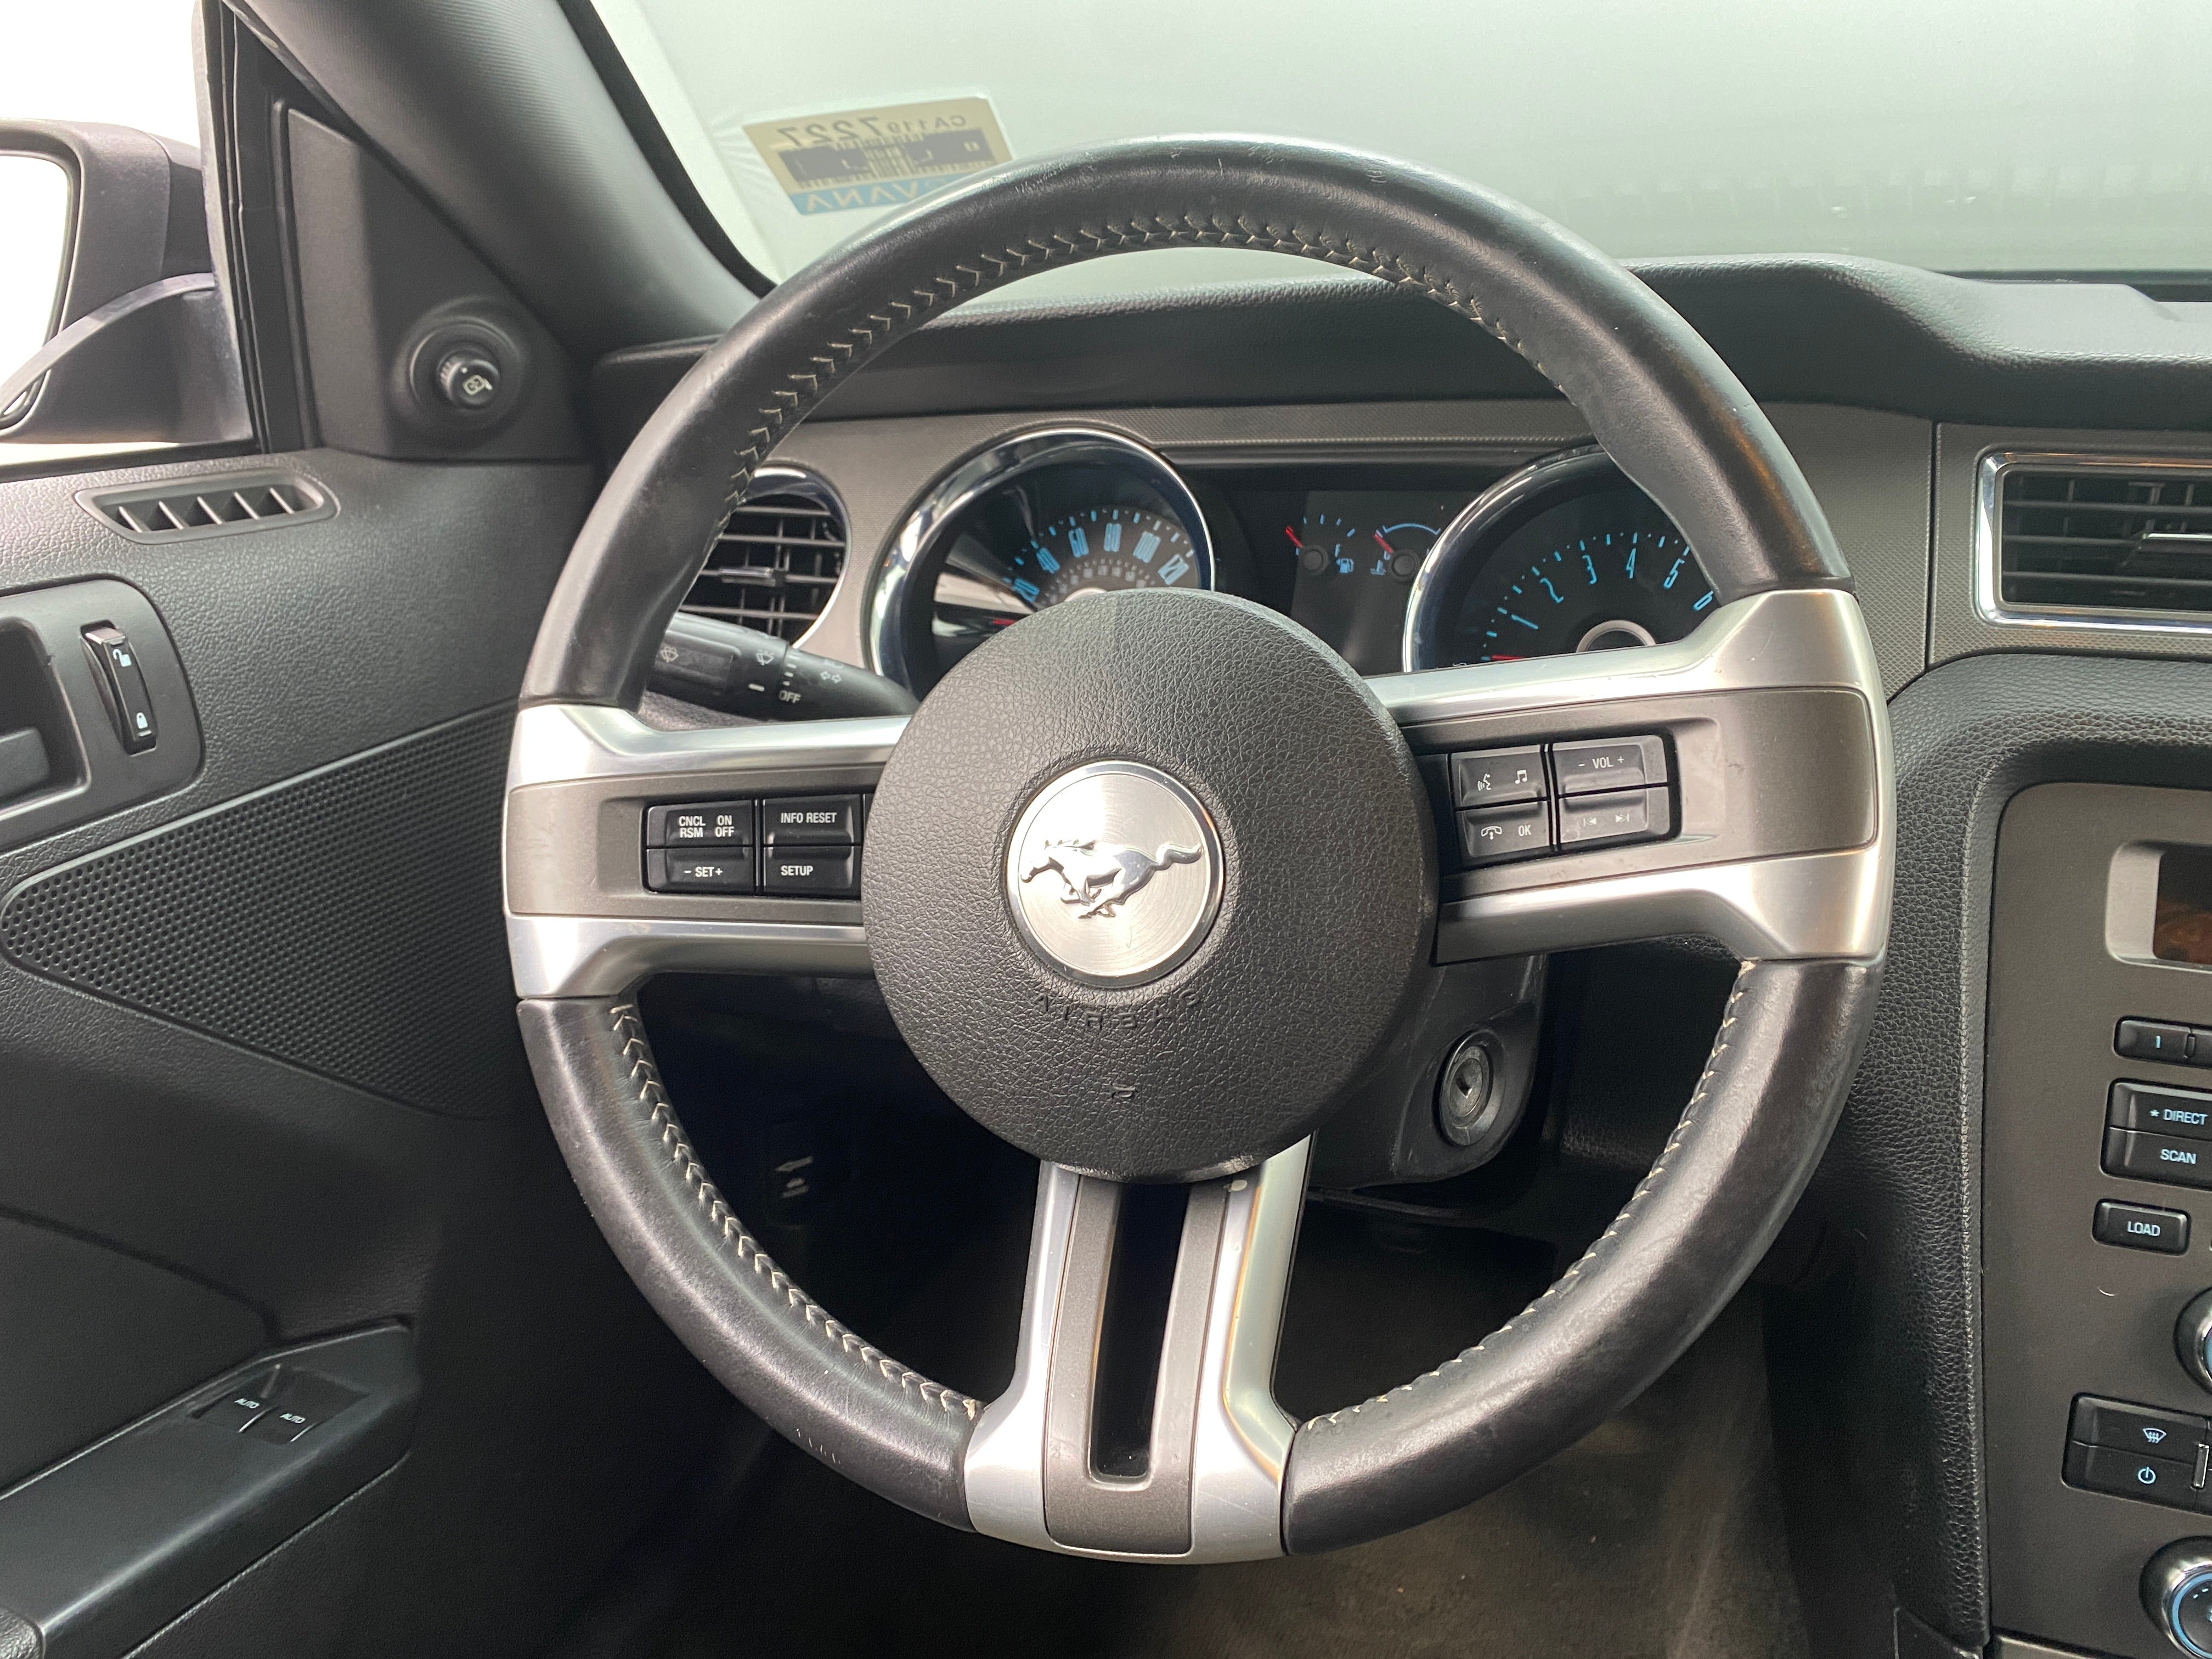 2014 Ford Mustang V6 4